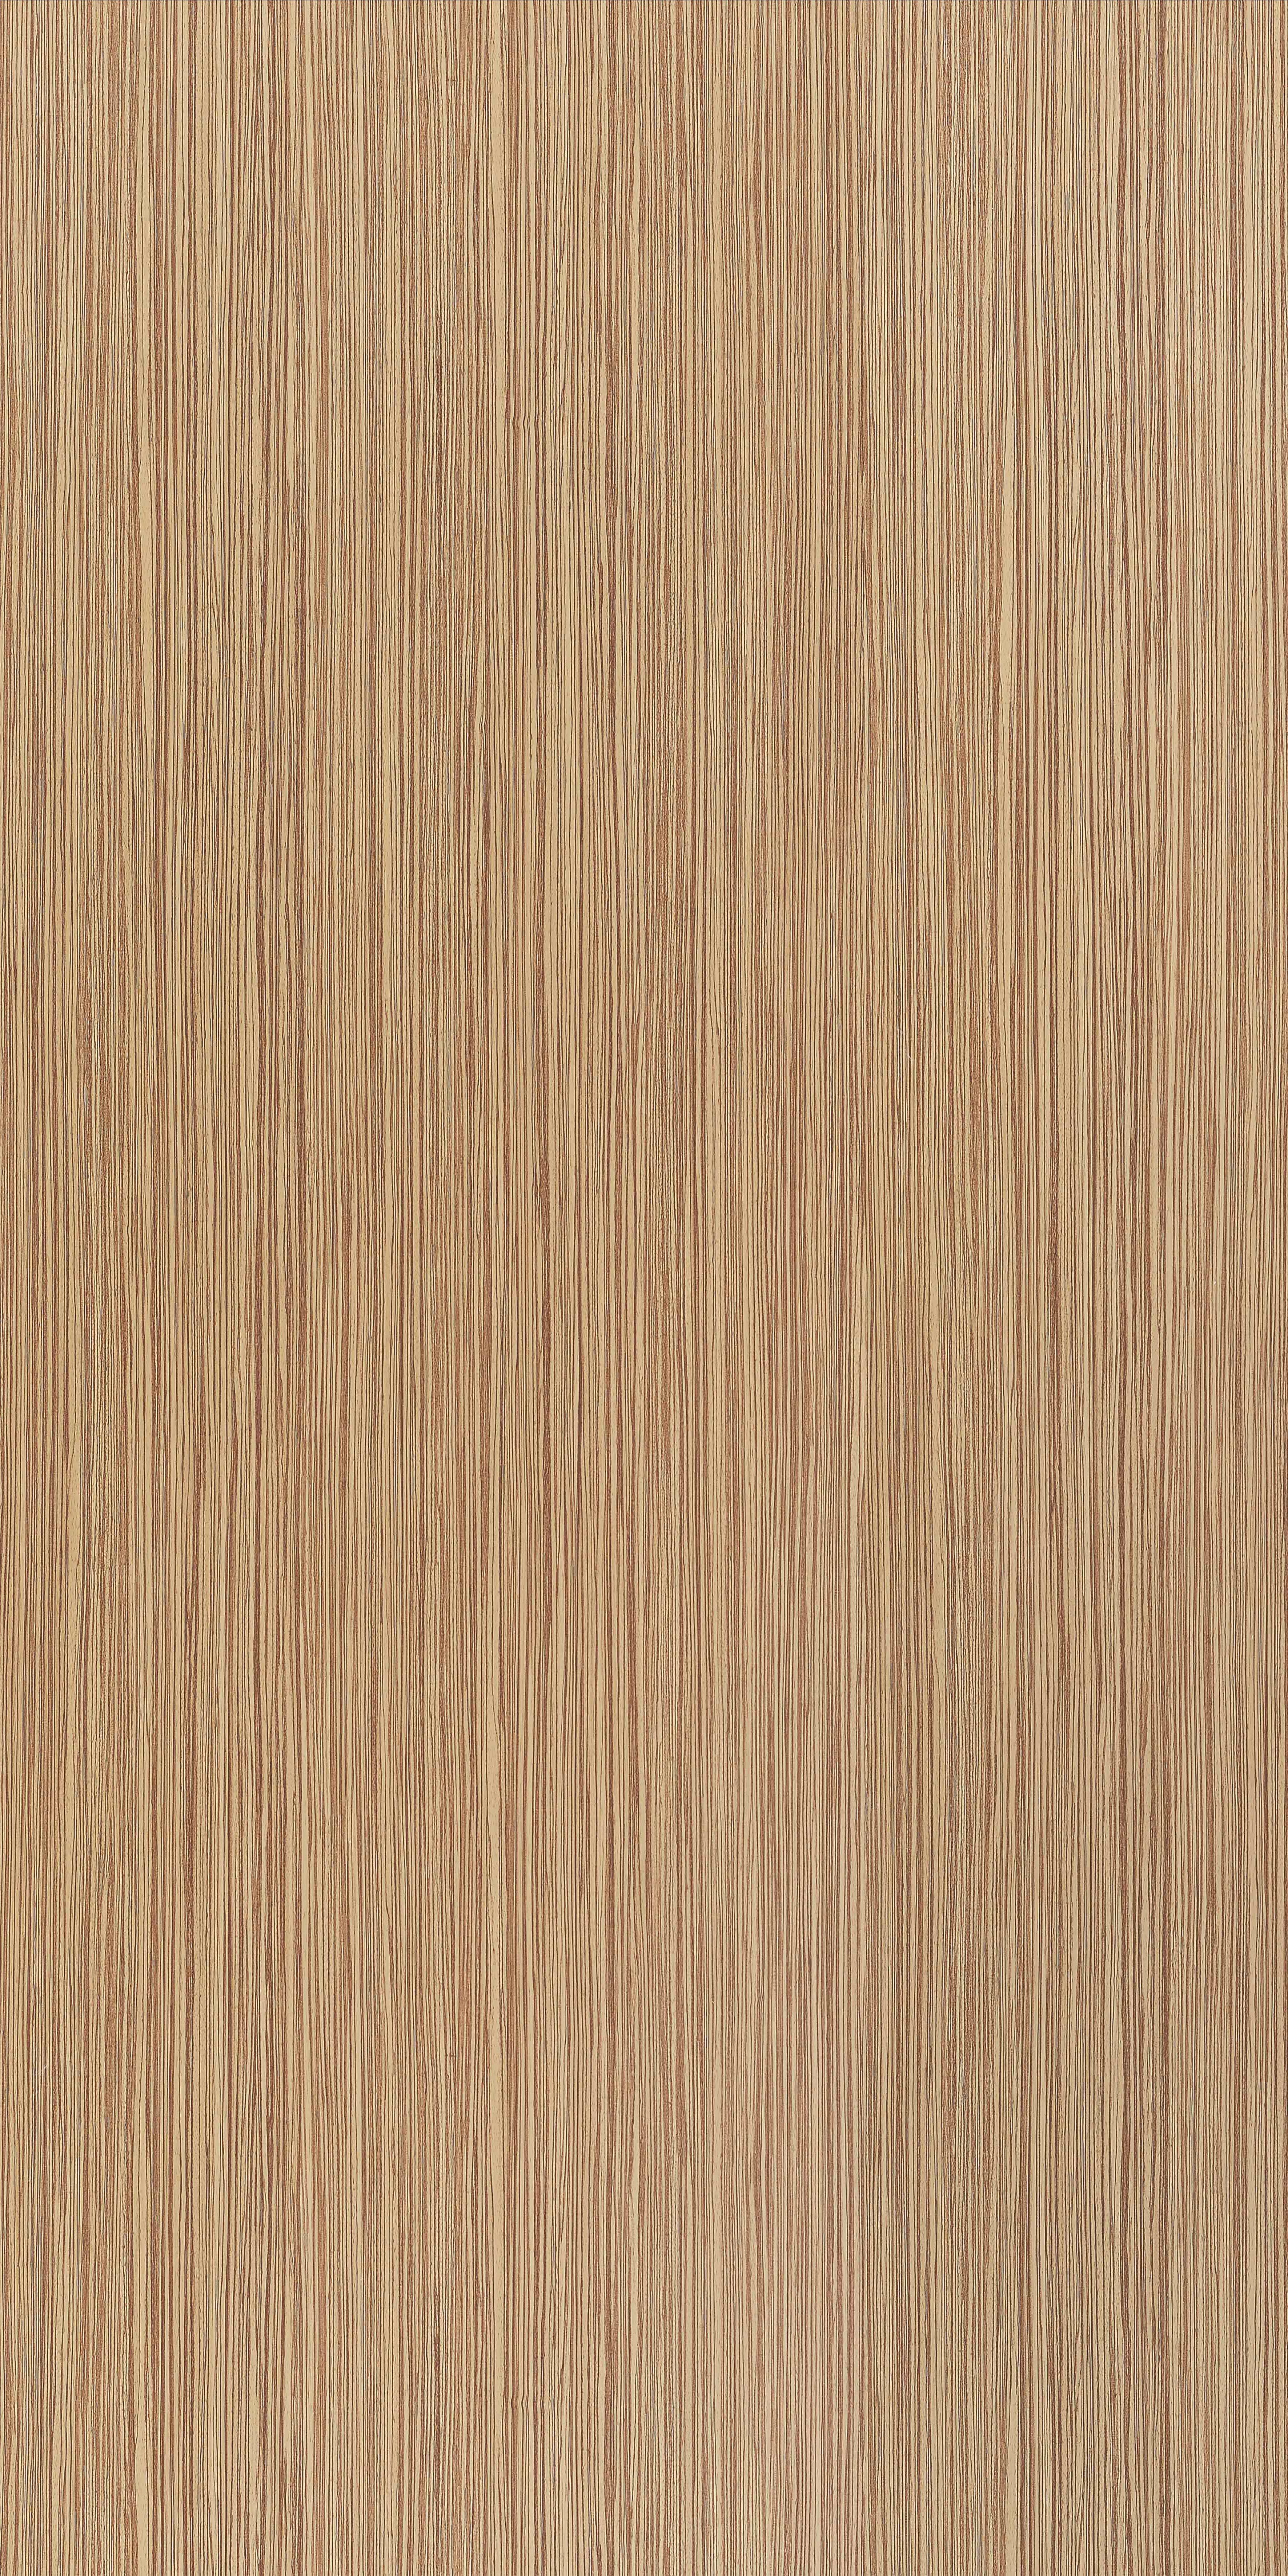 Керамическая плитка Creto Lili Wood 30x60 см, NRA_P0043